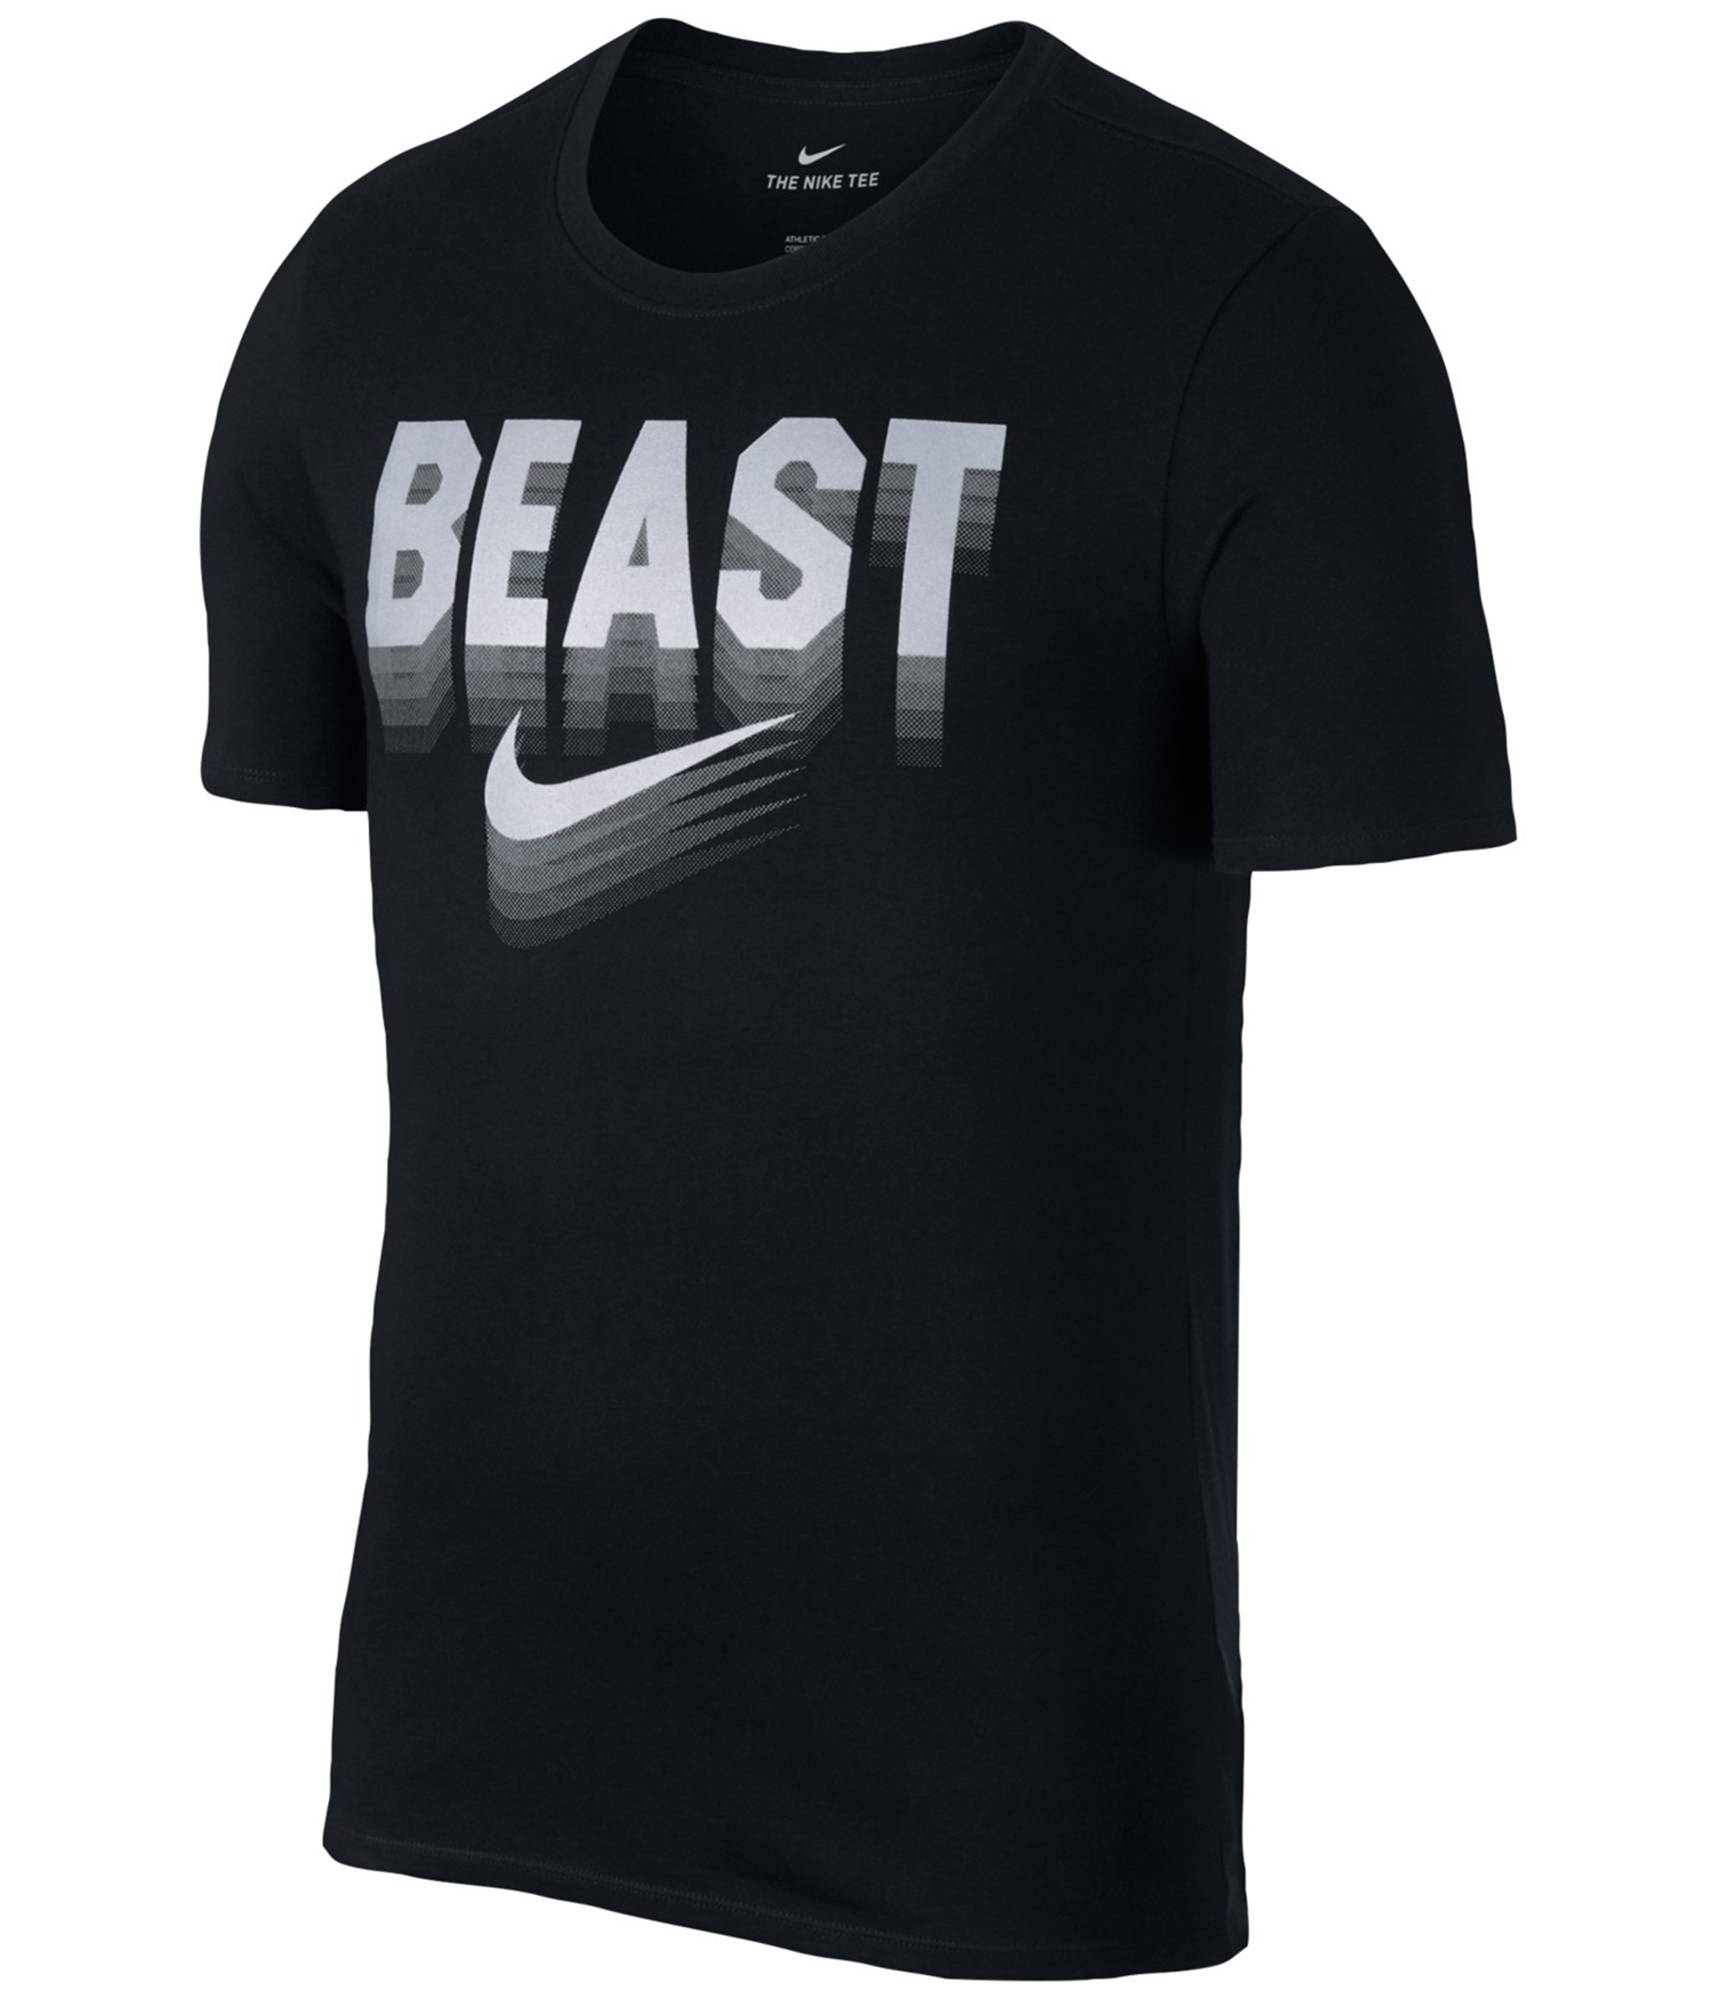 Parámetros varonil Gárgaras Buy a Mens Nike Beast Graphic T-Shirt Online | TagsWeekly.com, TW2